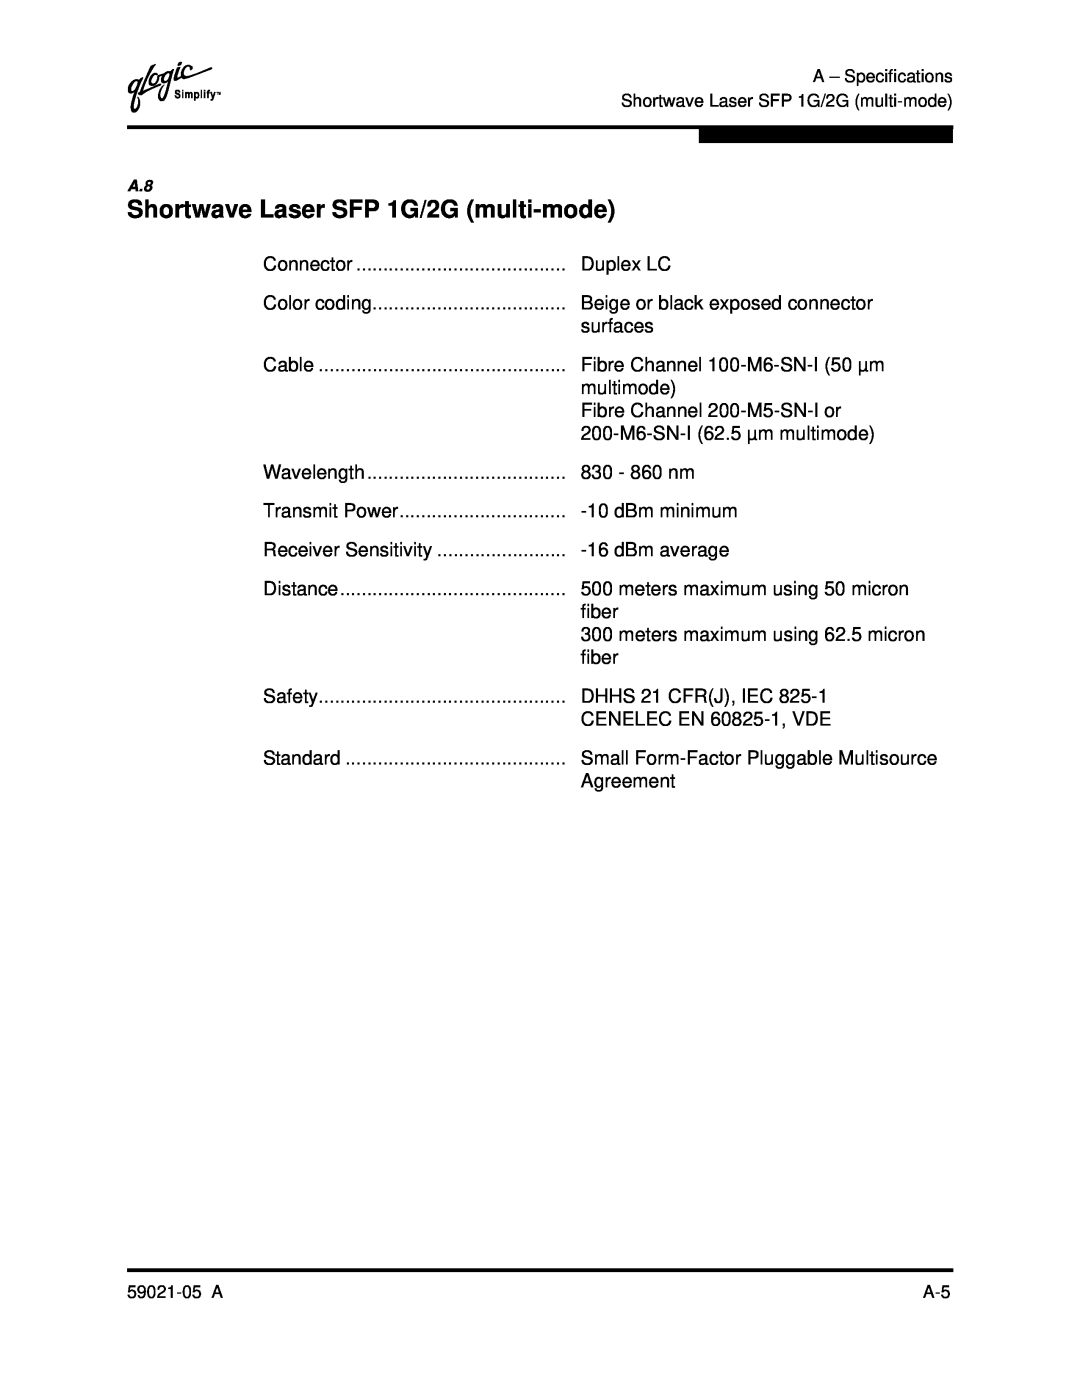 Q-Logic 59021-05 manual Shortwave Laser SFP 1G/2G multi-mode 